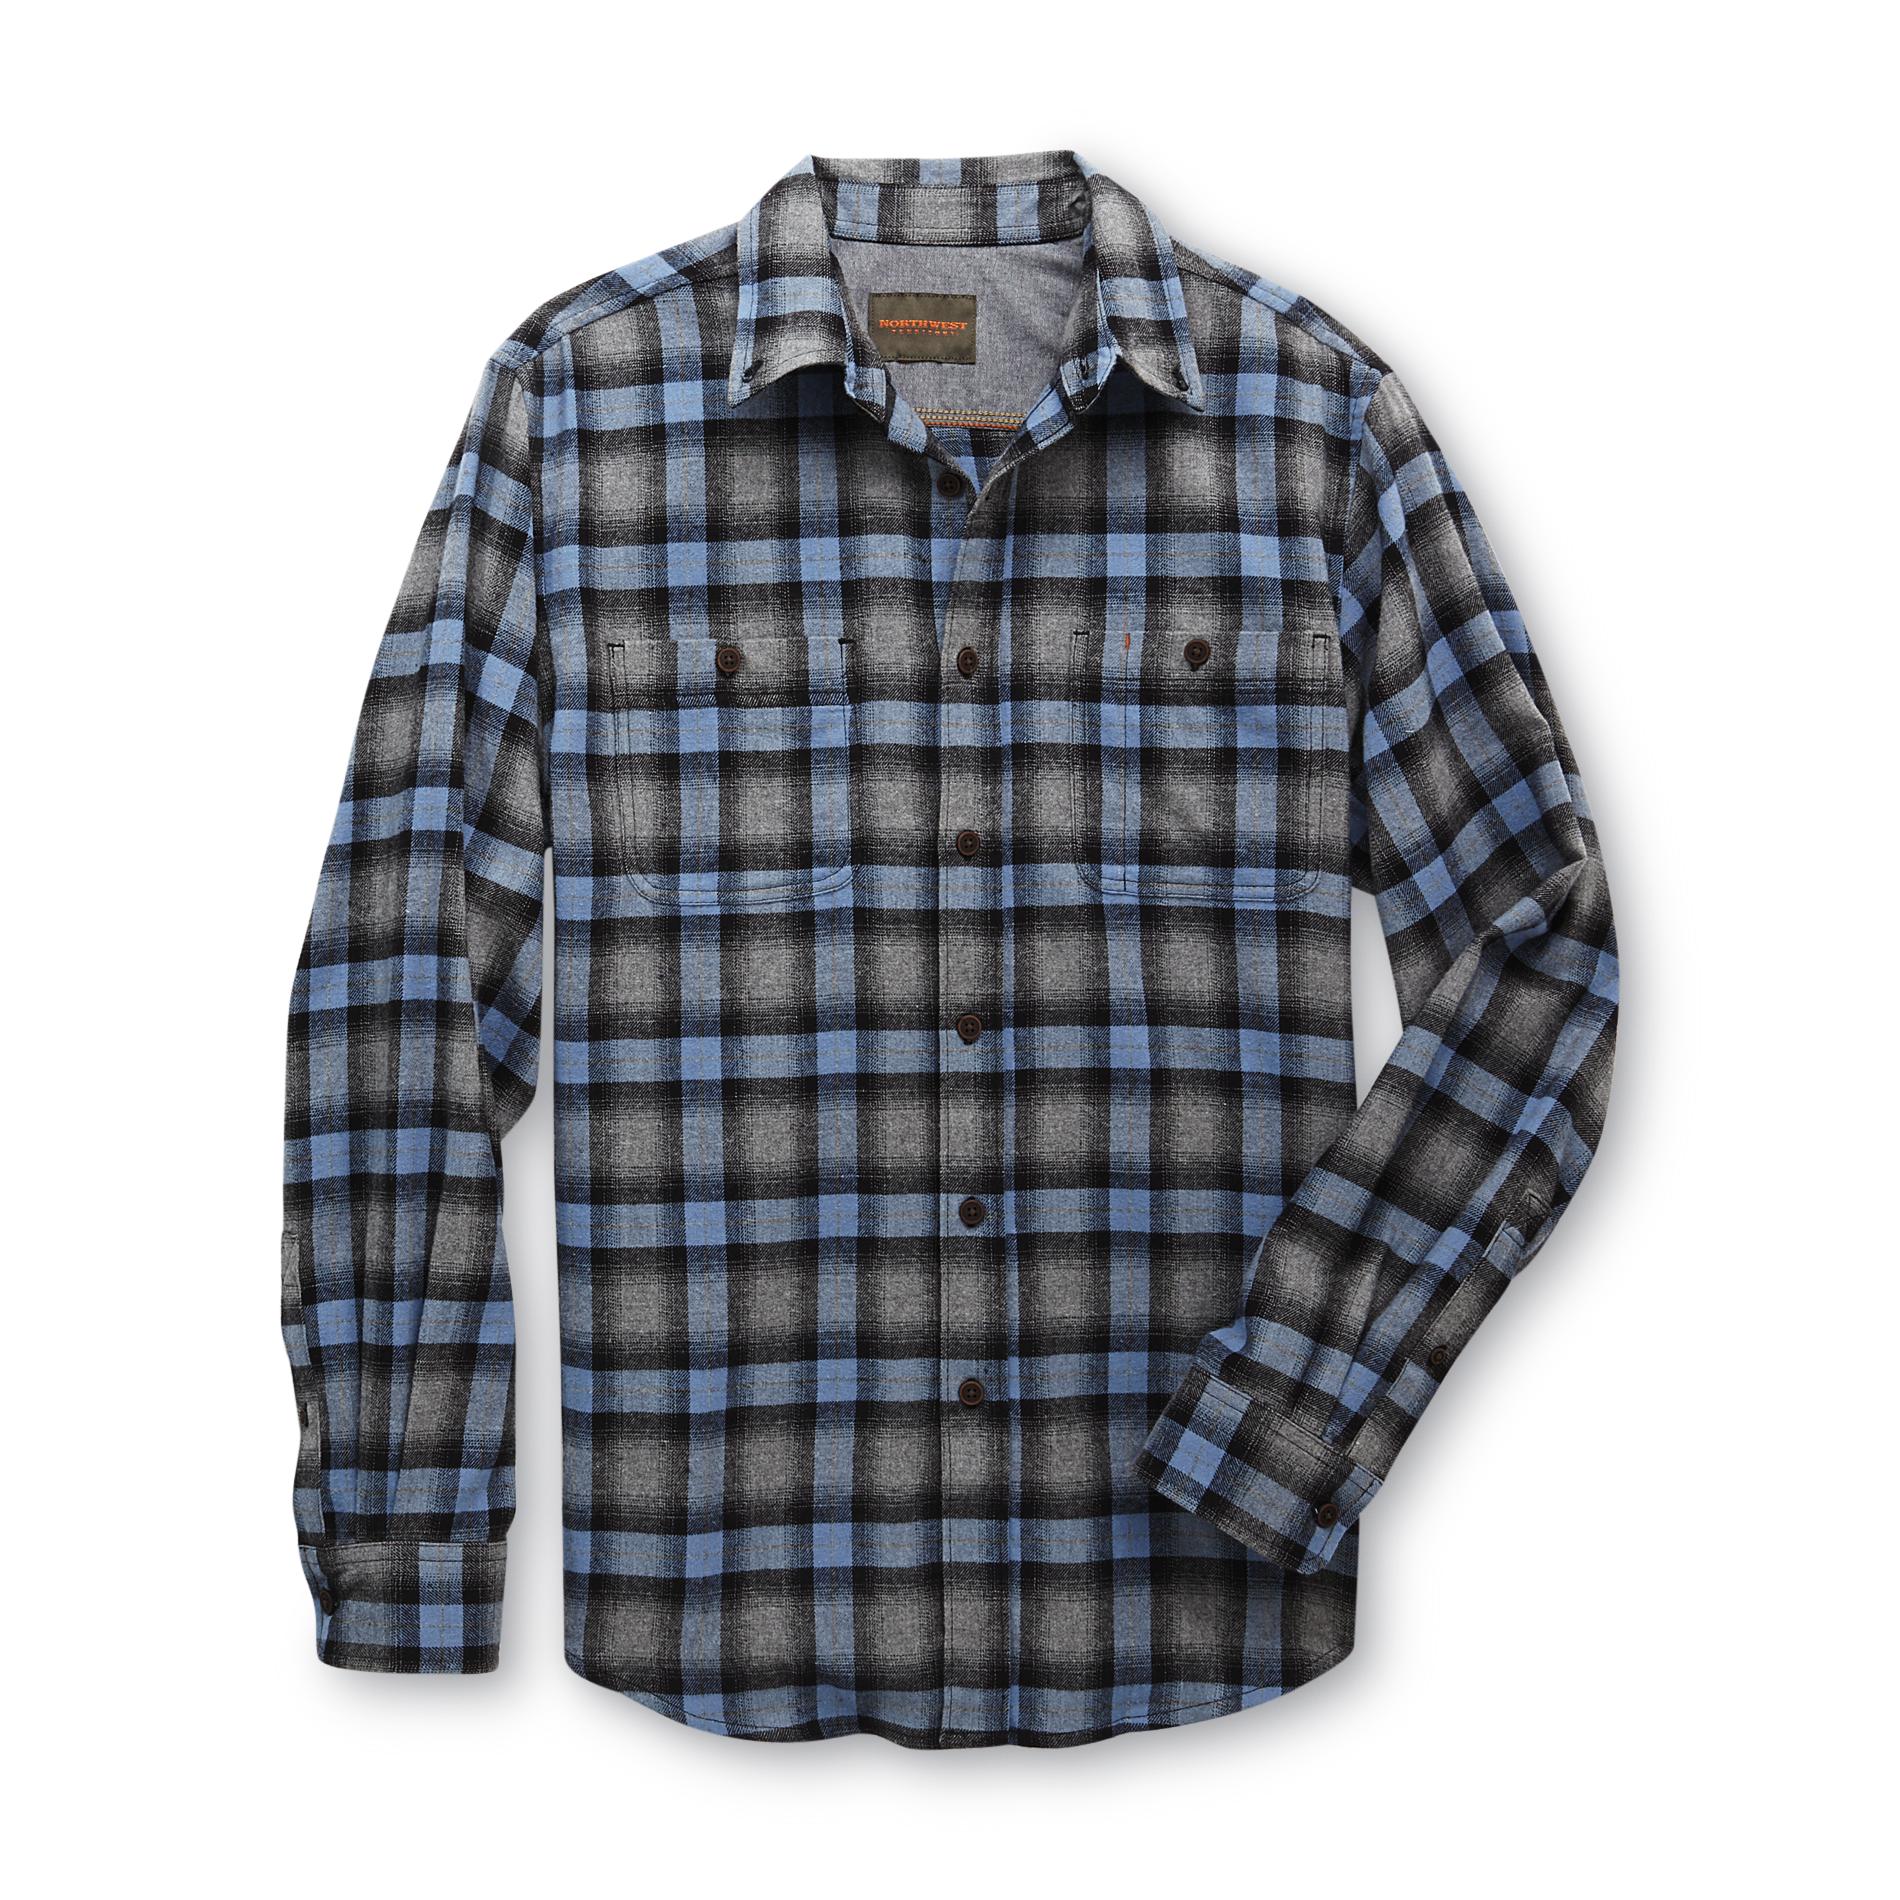 Northwest Territory Men's Flannel Shirt - Plaid